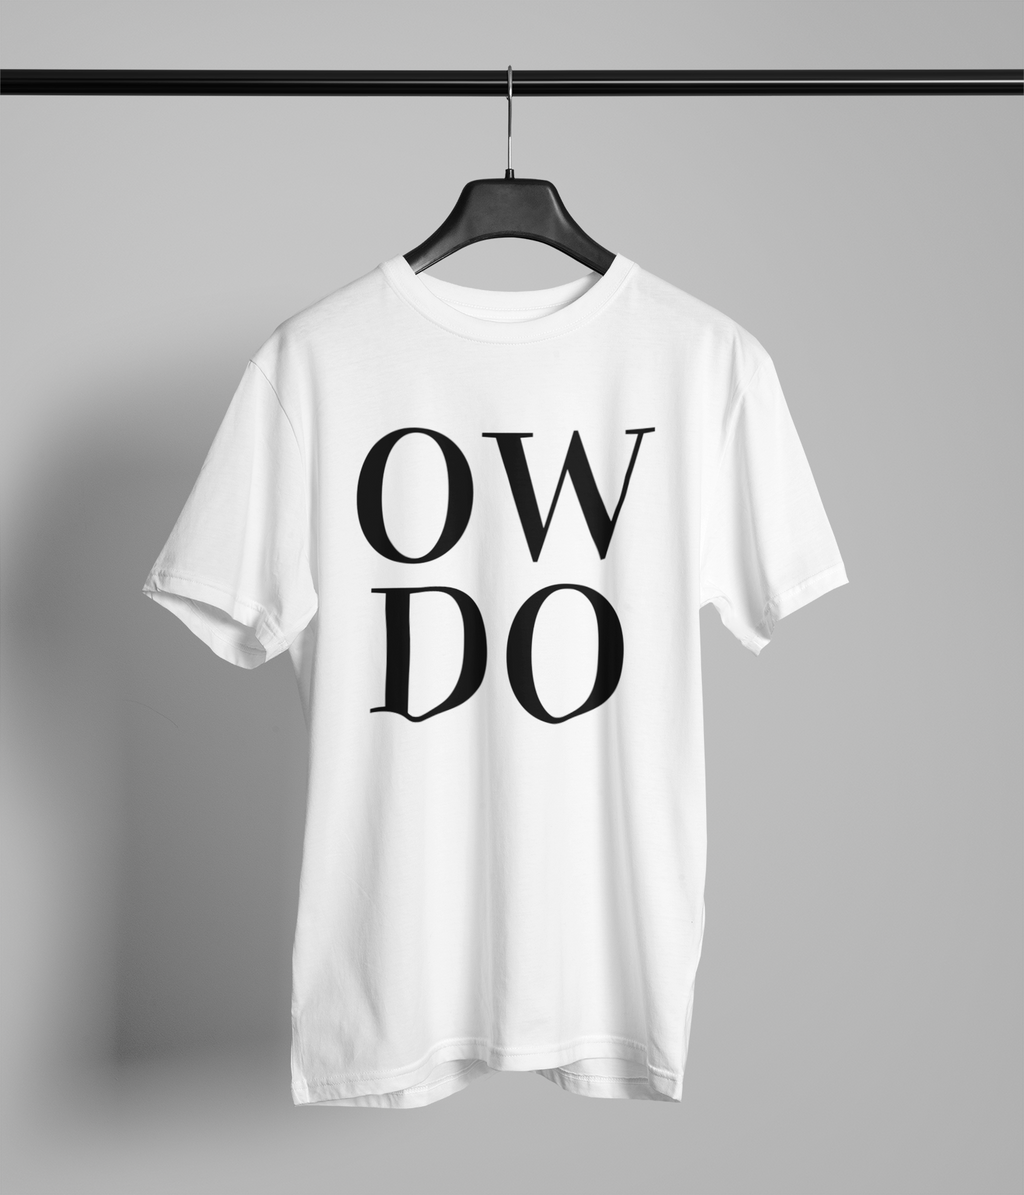 OW DO Northern Slang T-shirt Unisex